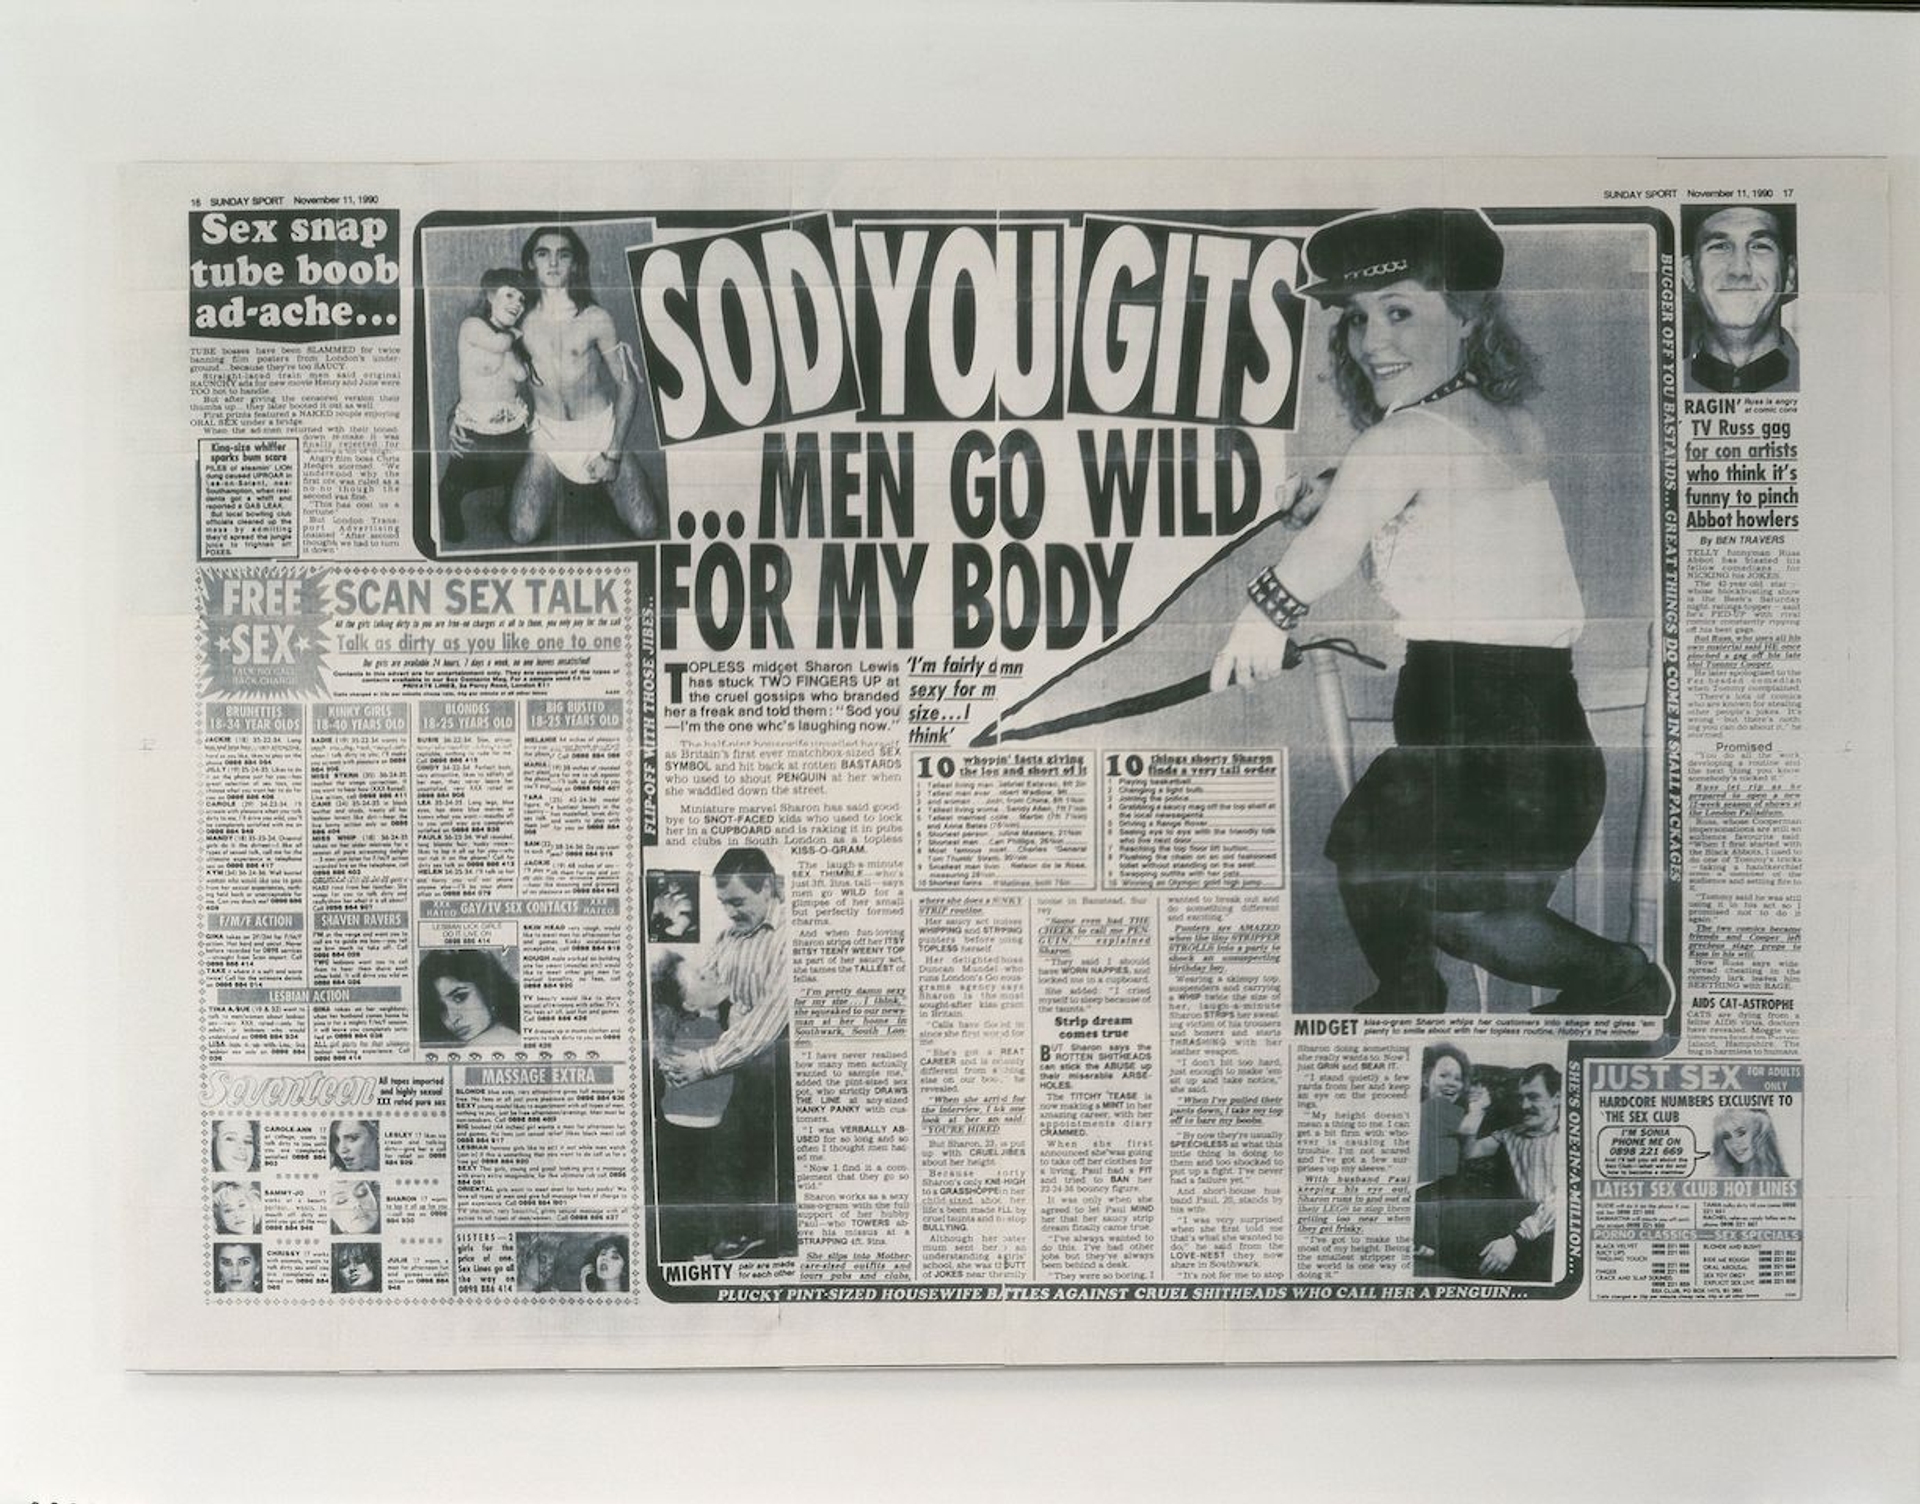 Sarah Lucas, "Sod You Gits," 1991. Courtesy of Sadie Coles HQ.